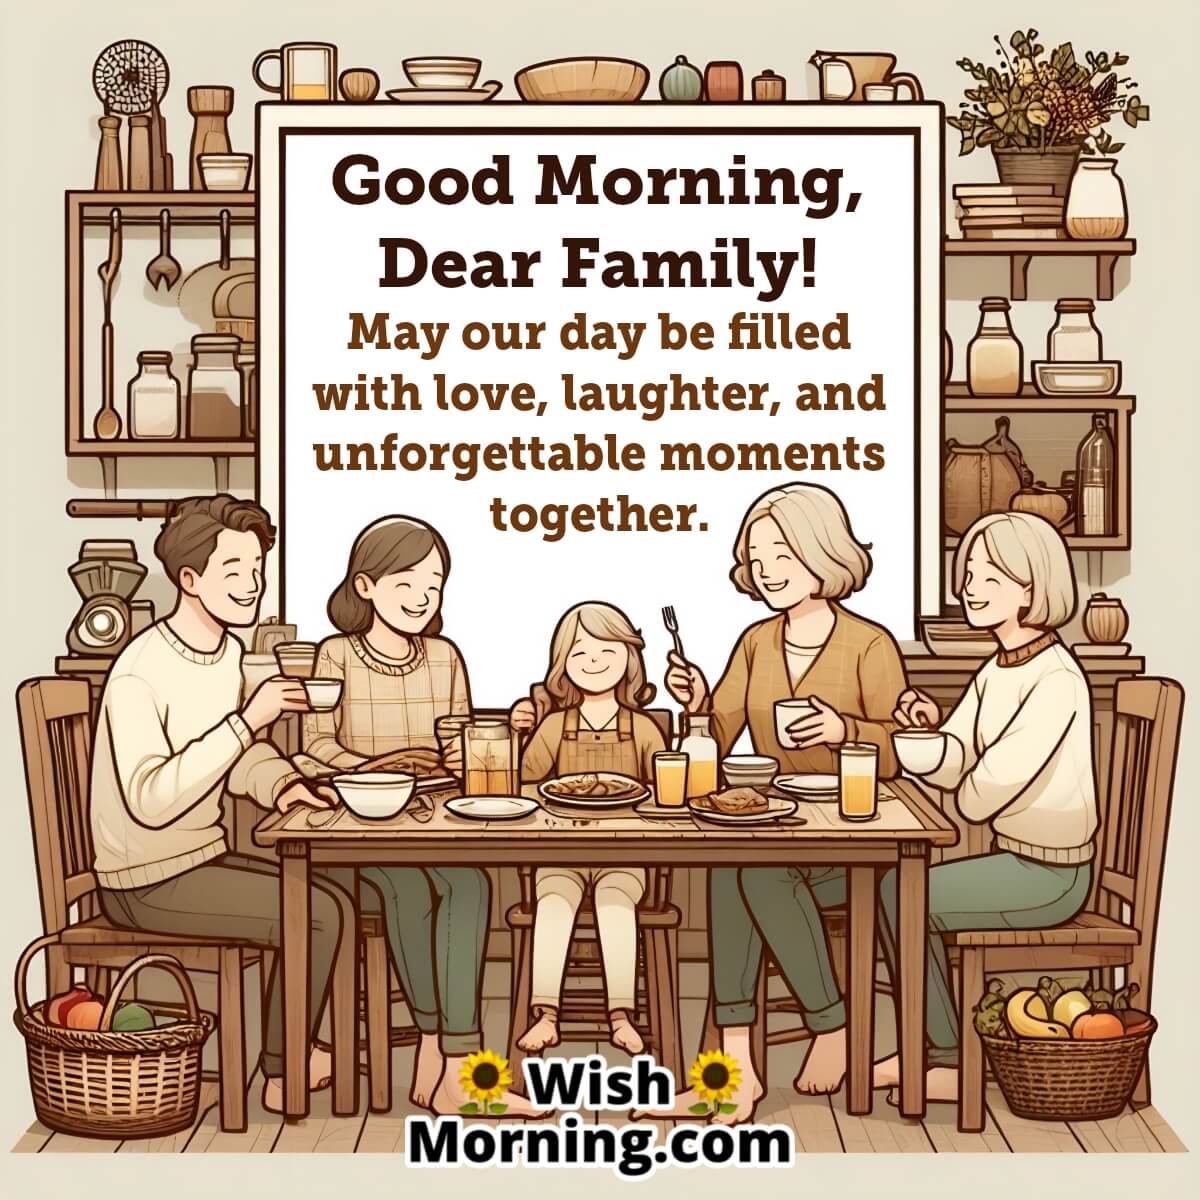 Good Morning Dear Family